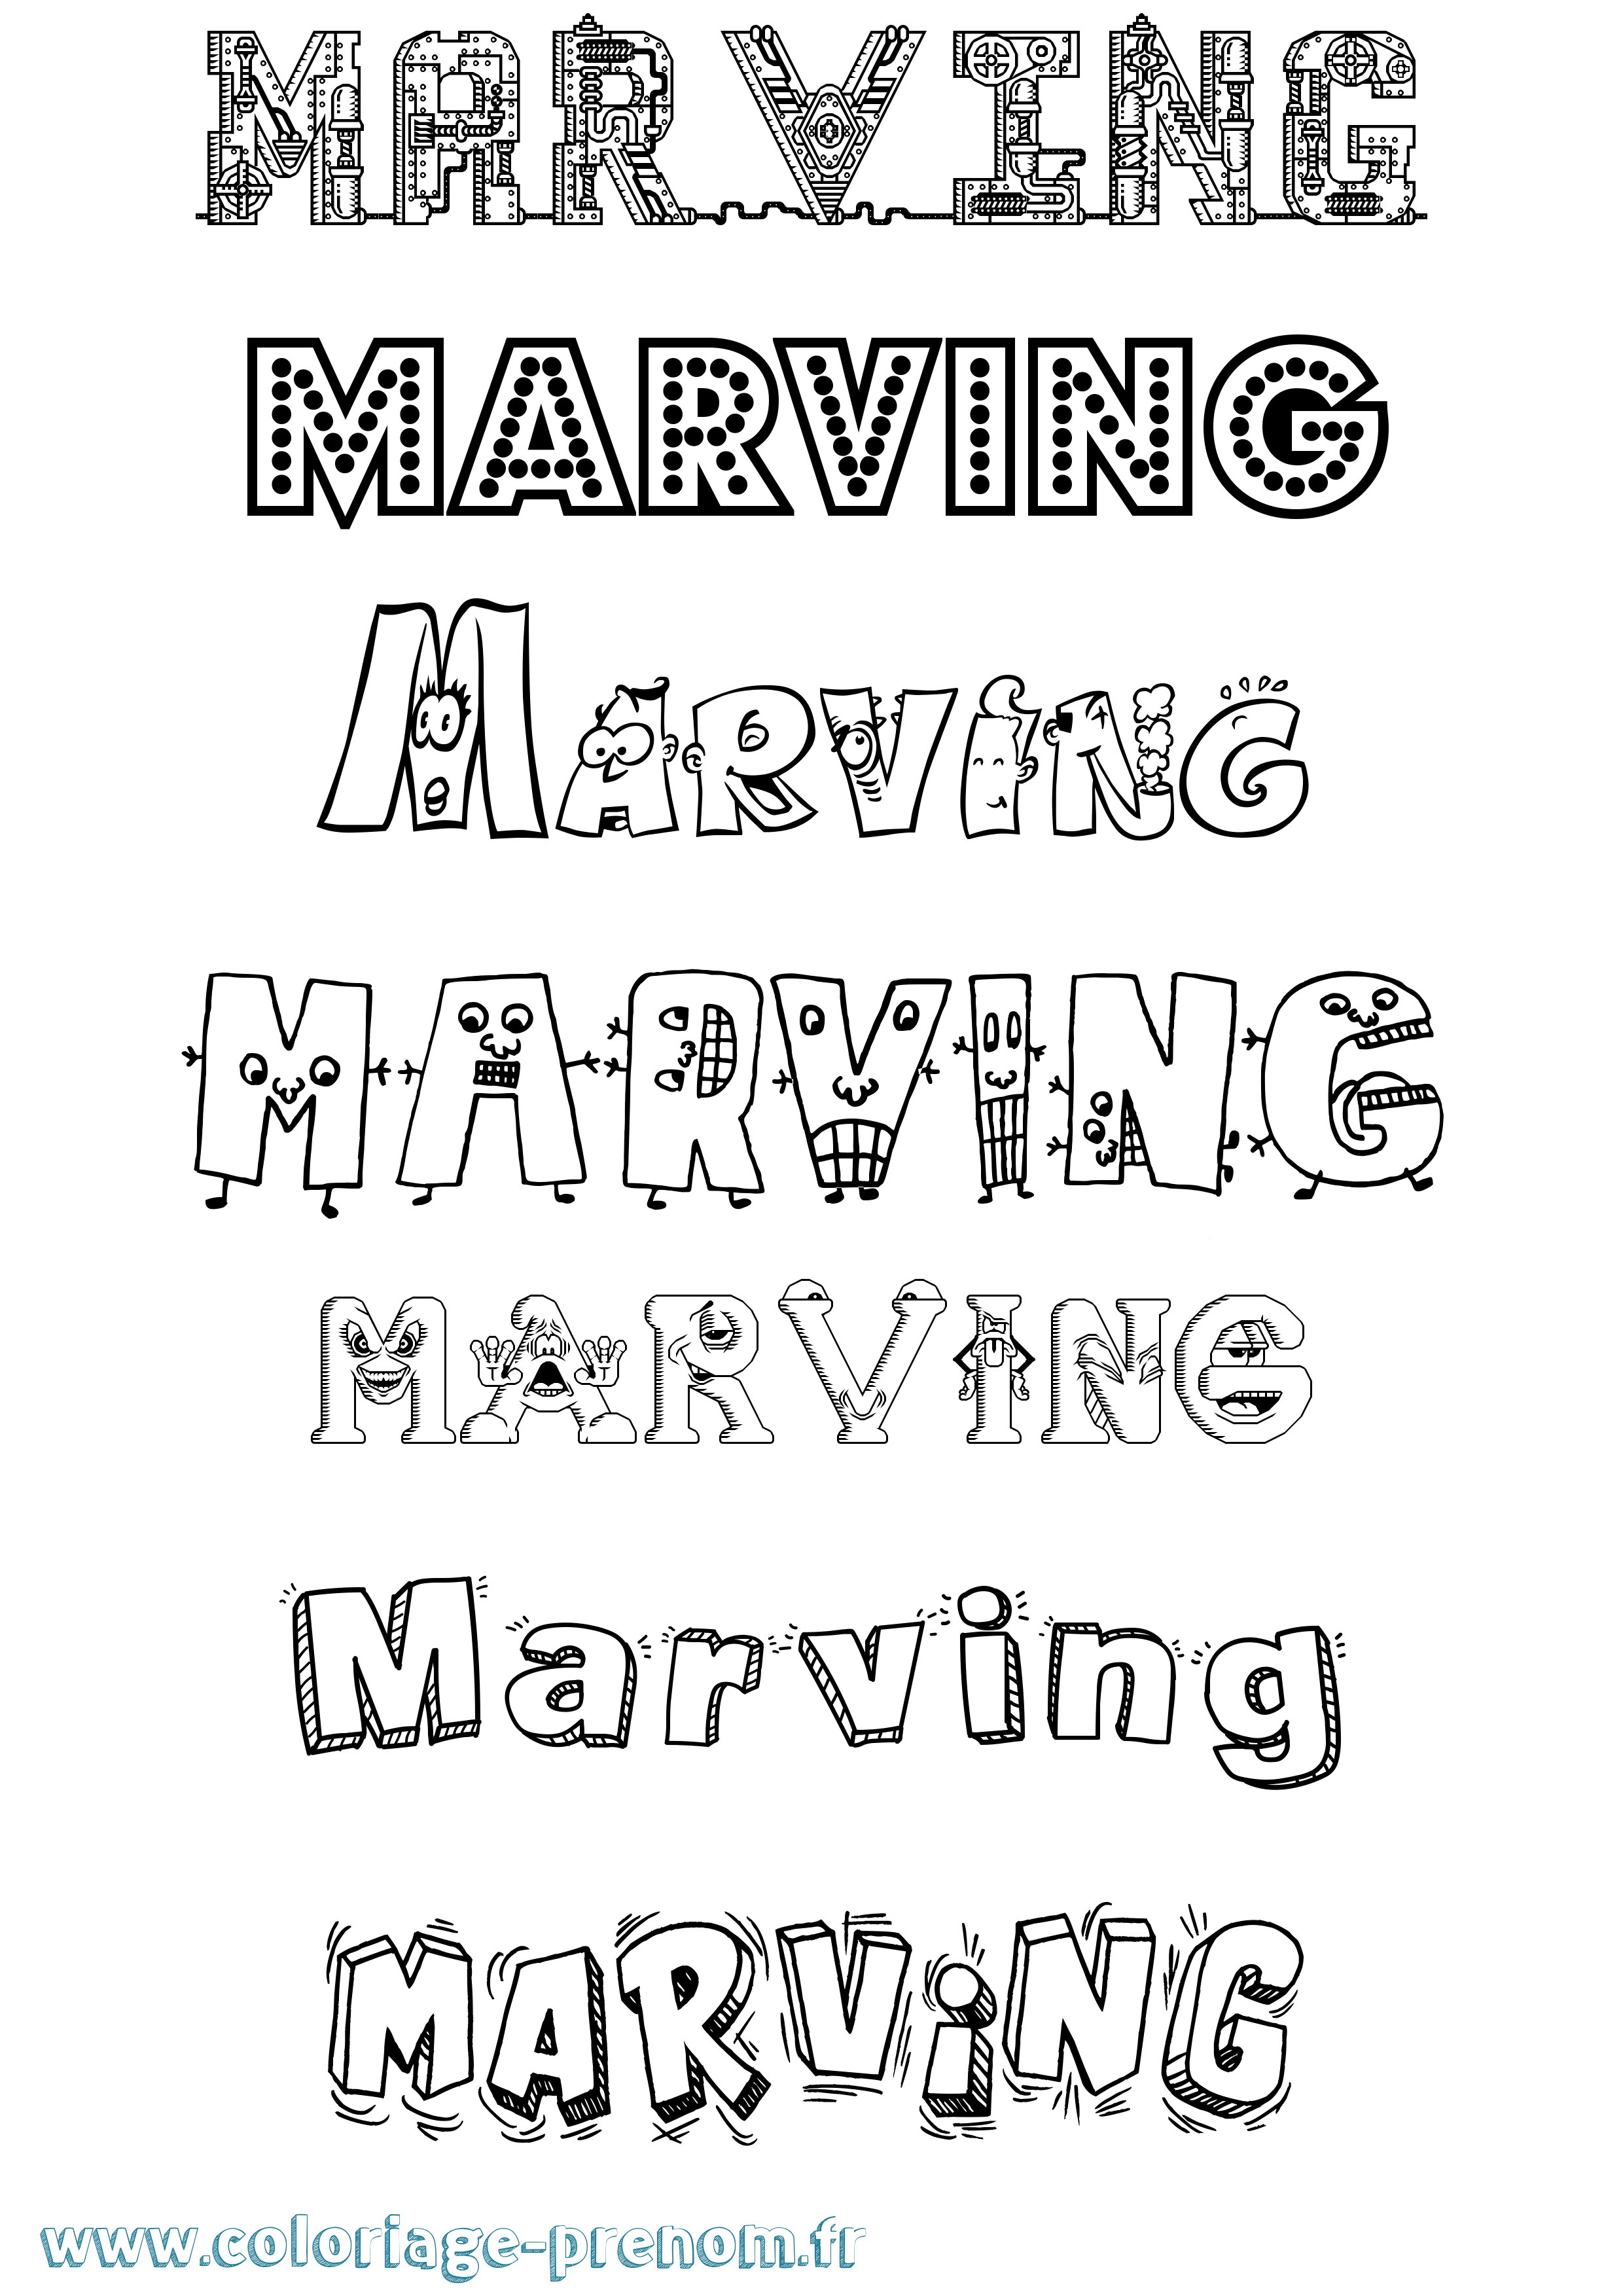 Coloriage prénom Marving Fun